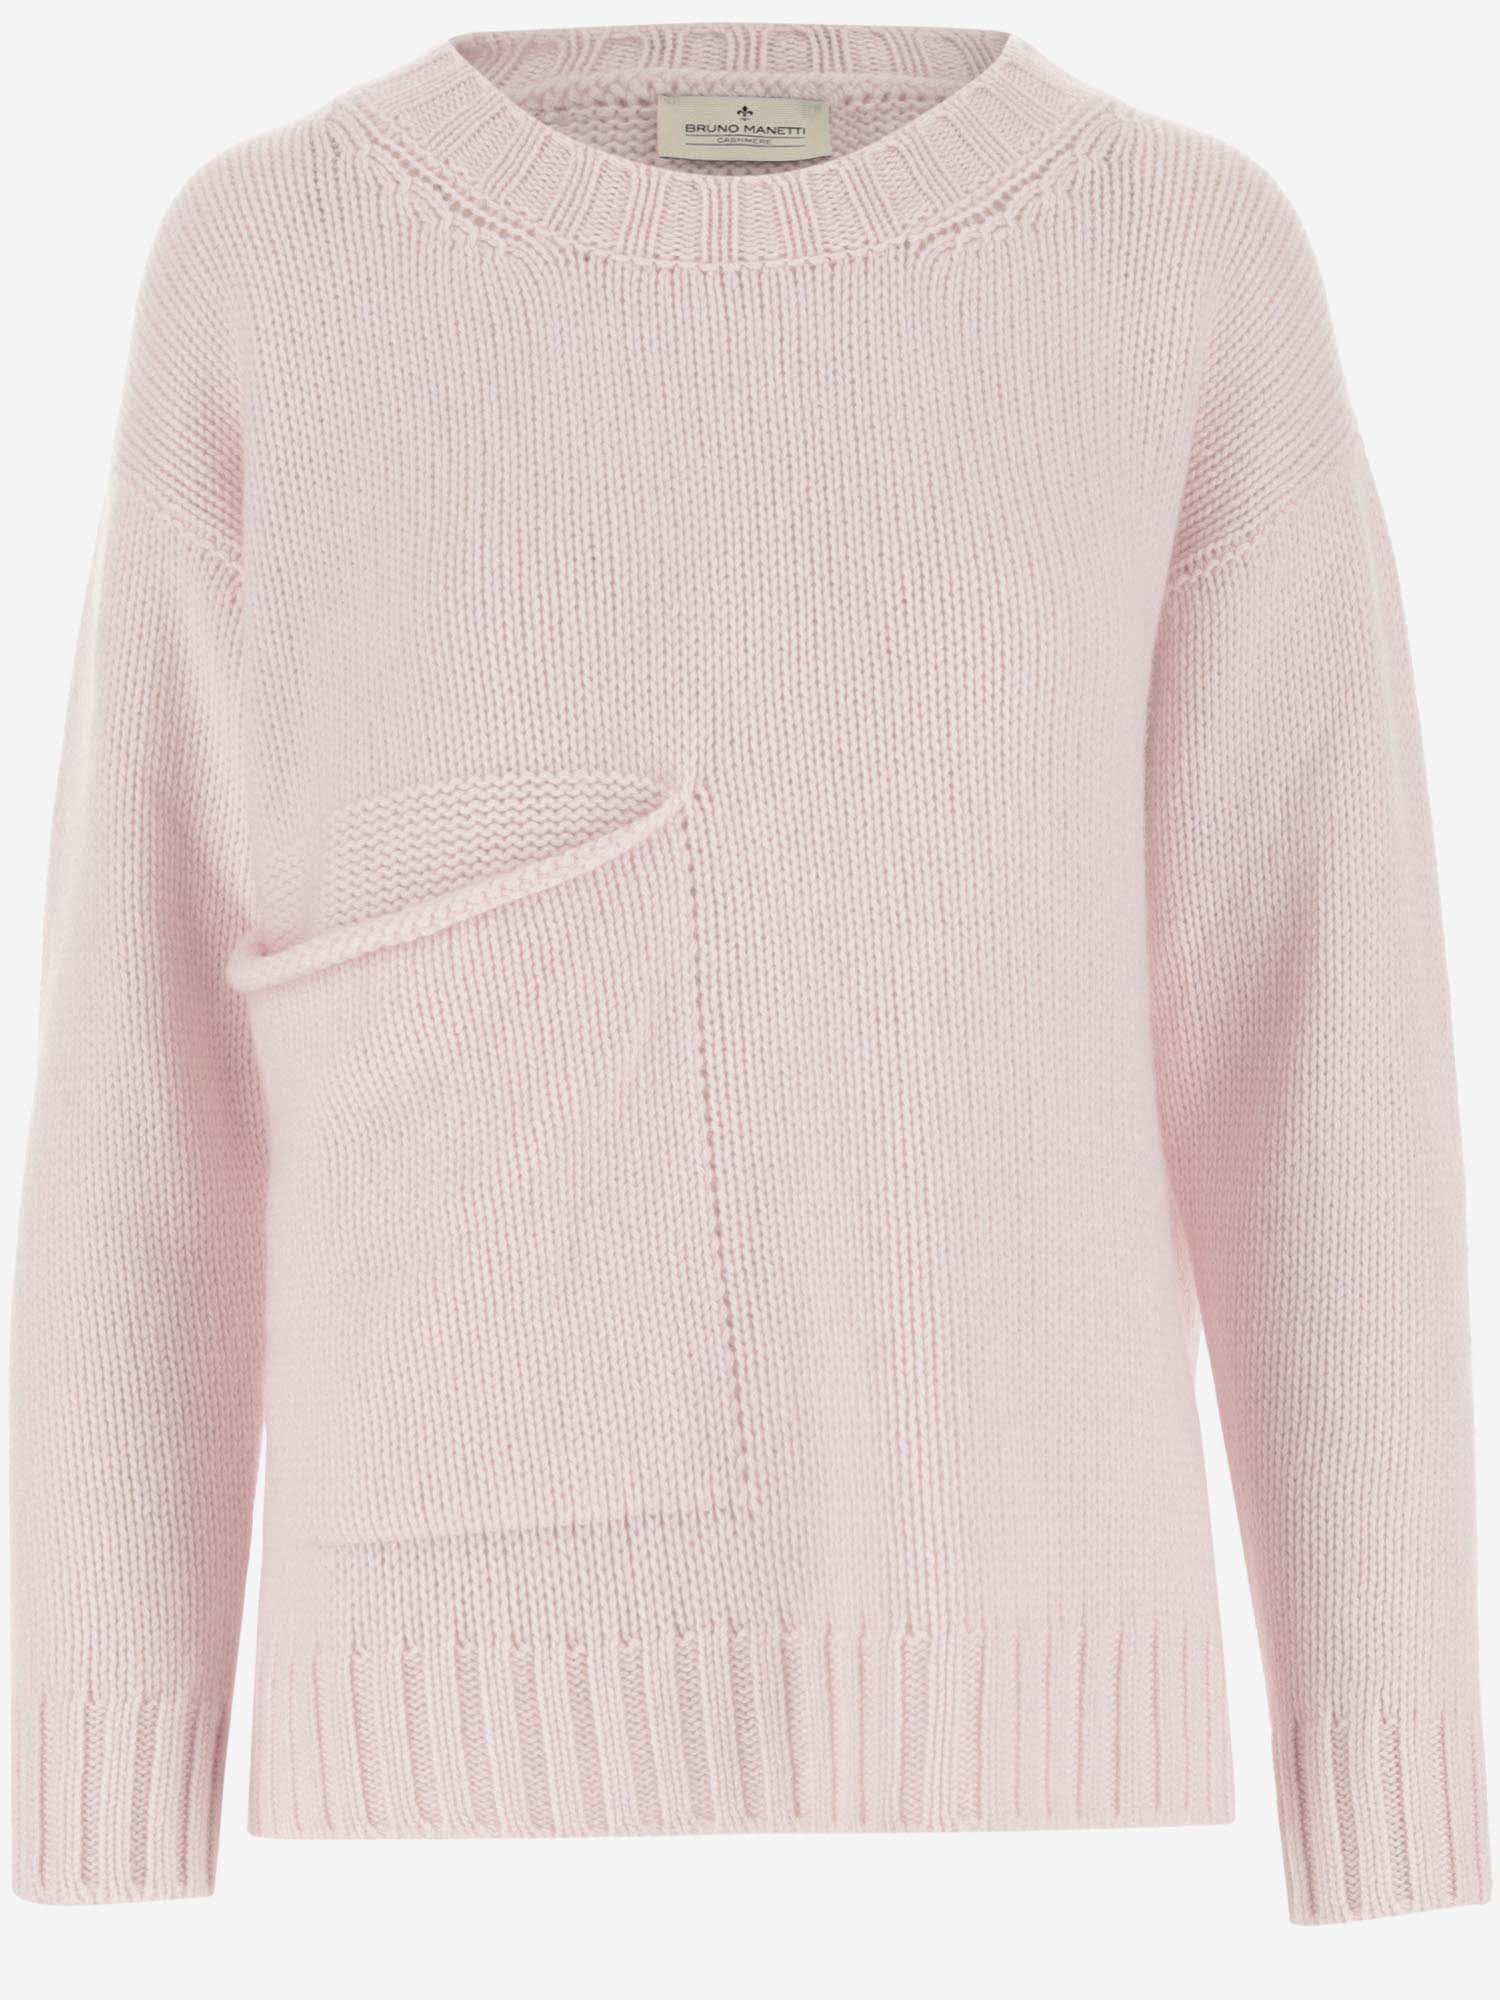 Bruno Manetti Cashmere Sweater In Pink